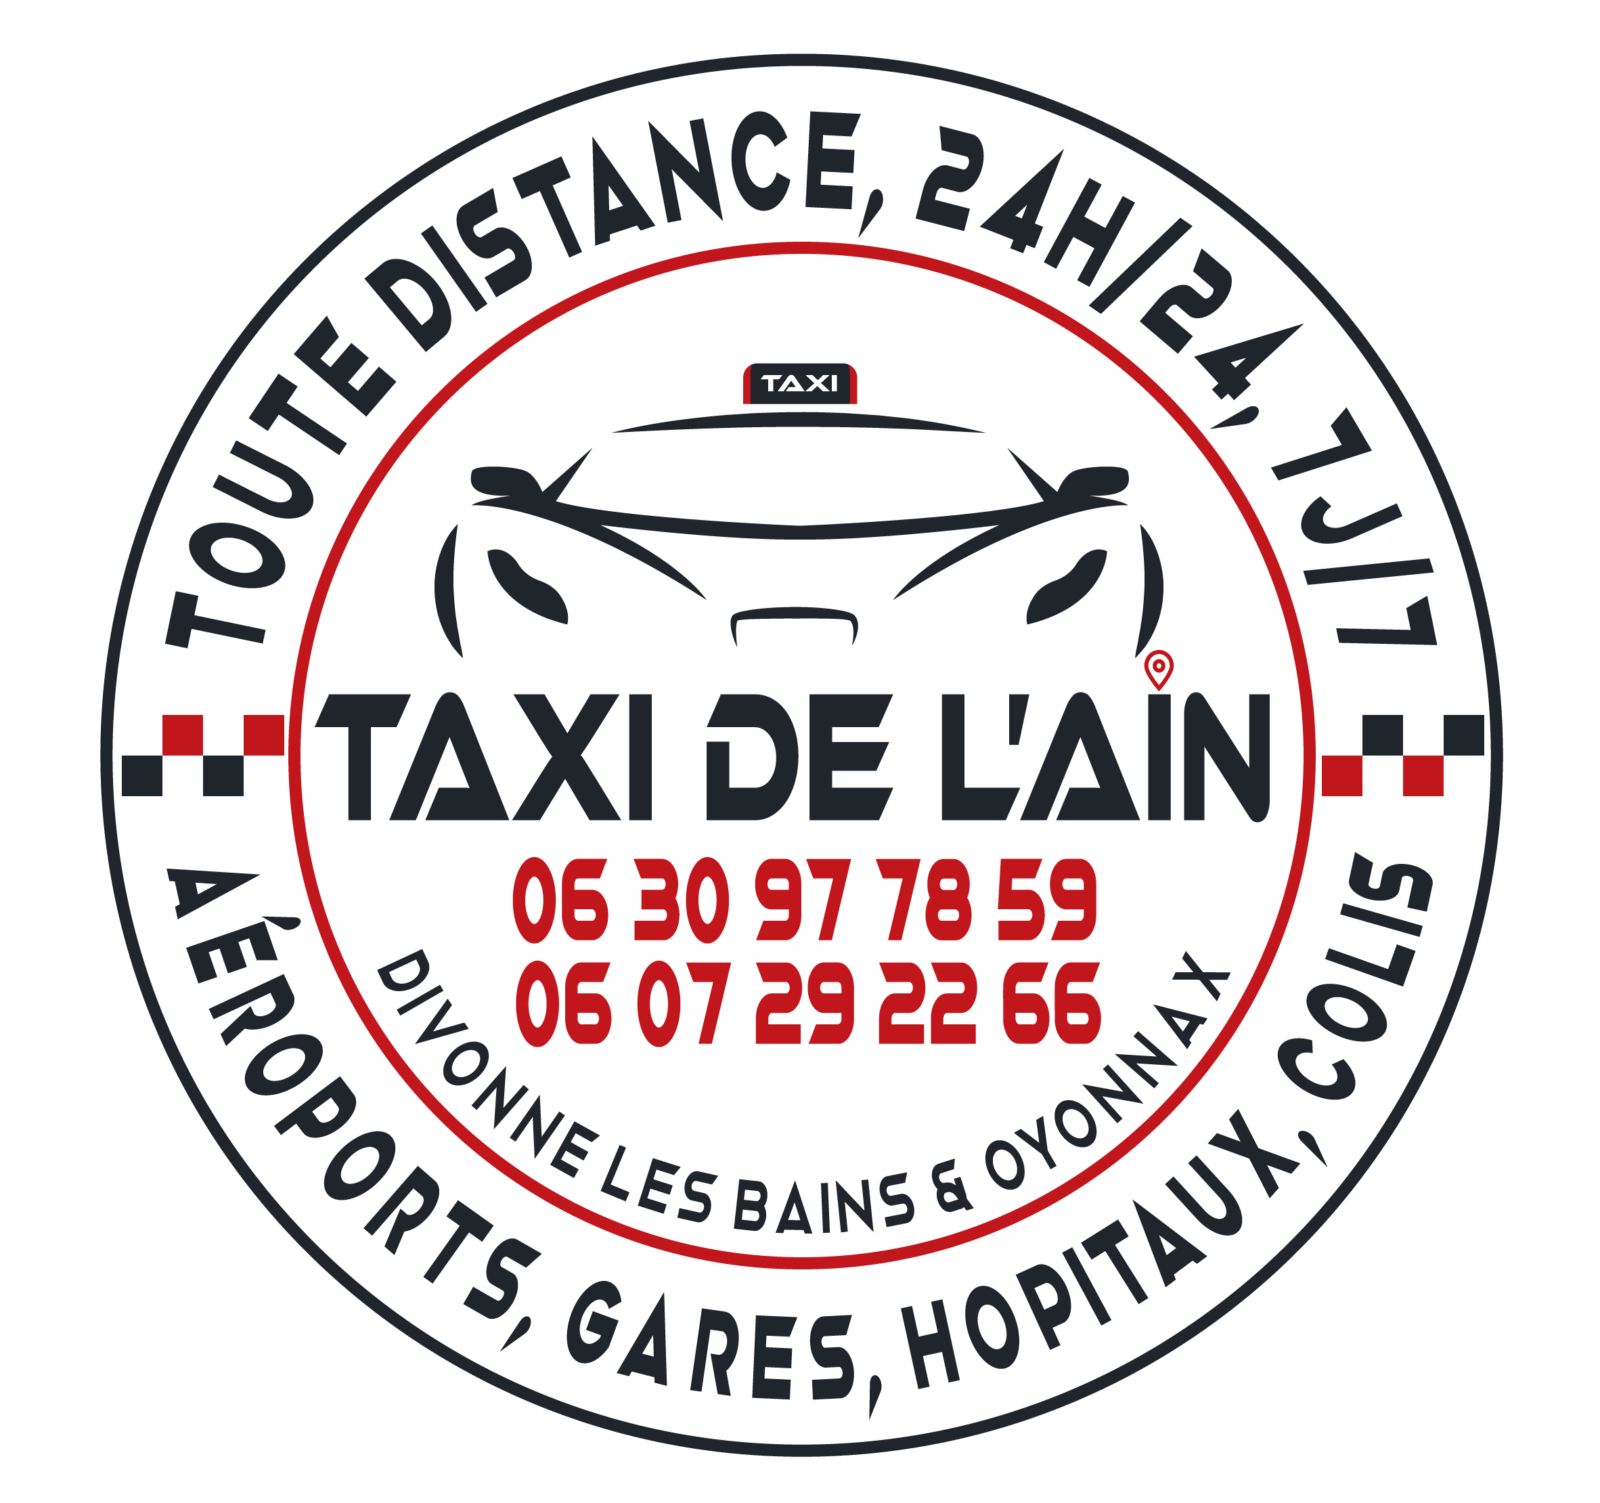 TAXI DE LAIN logo_1